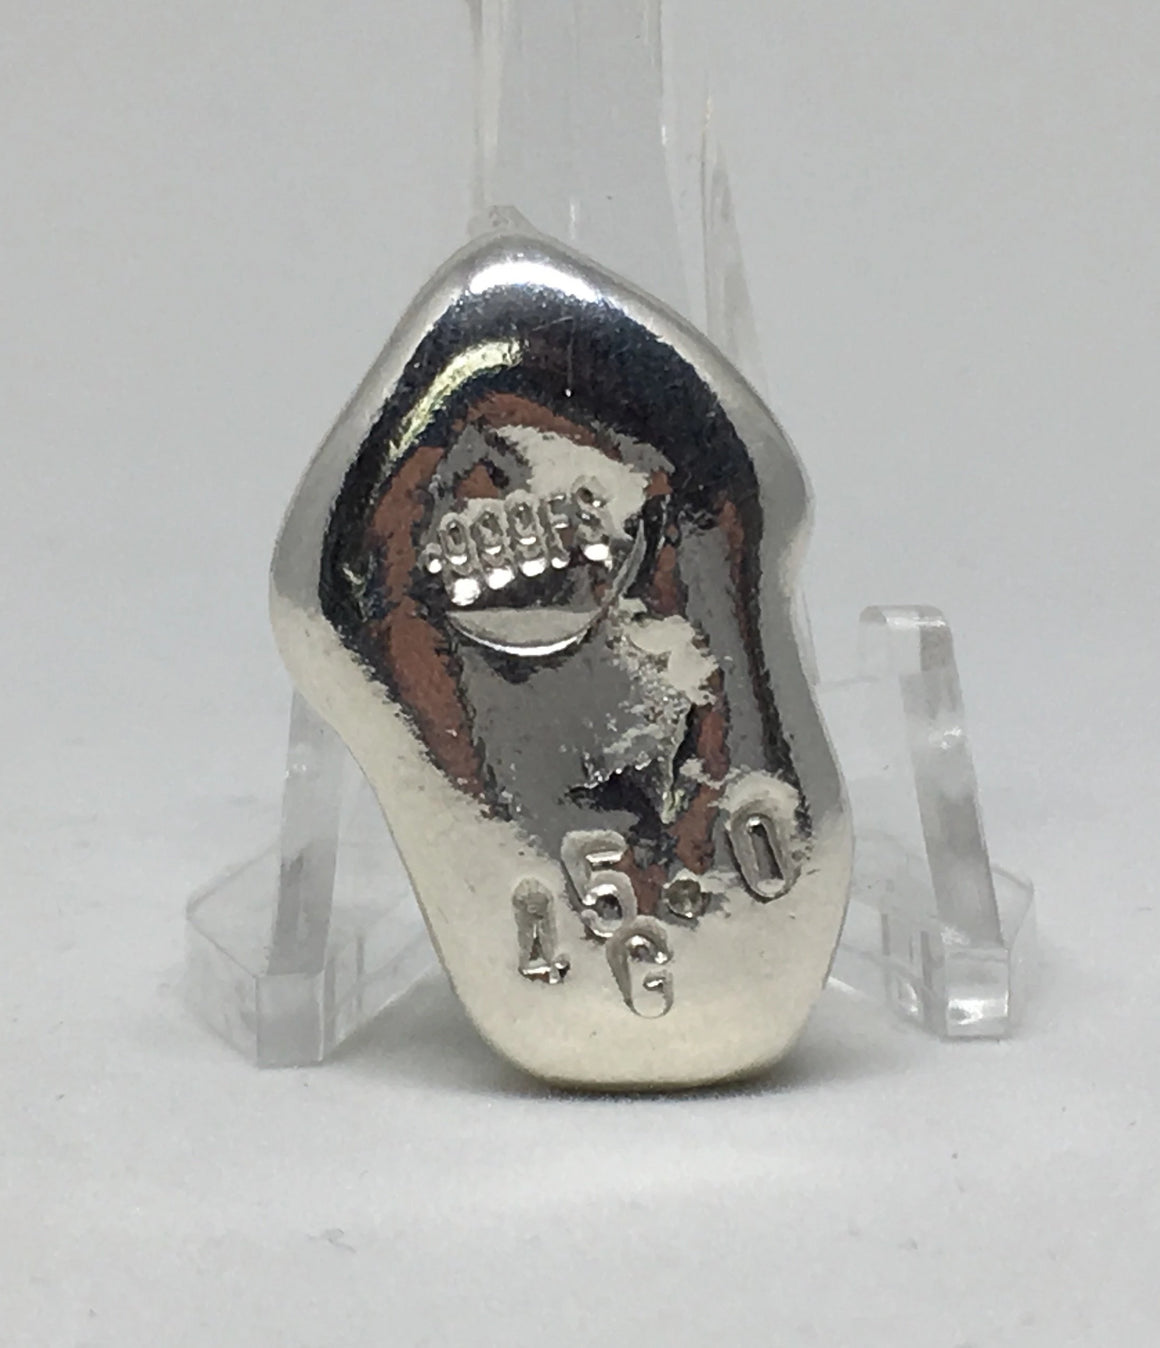 Lightning Bolt by Tomoko's Enterprize, 45g .999 Fine Silver Poured Art